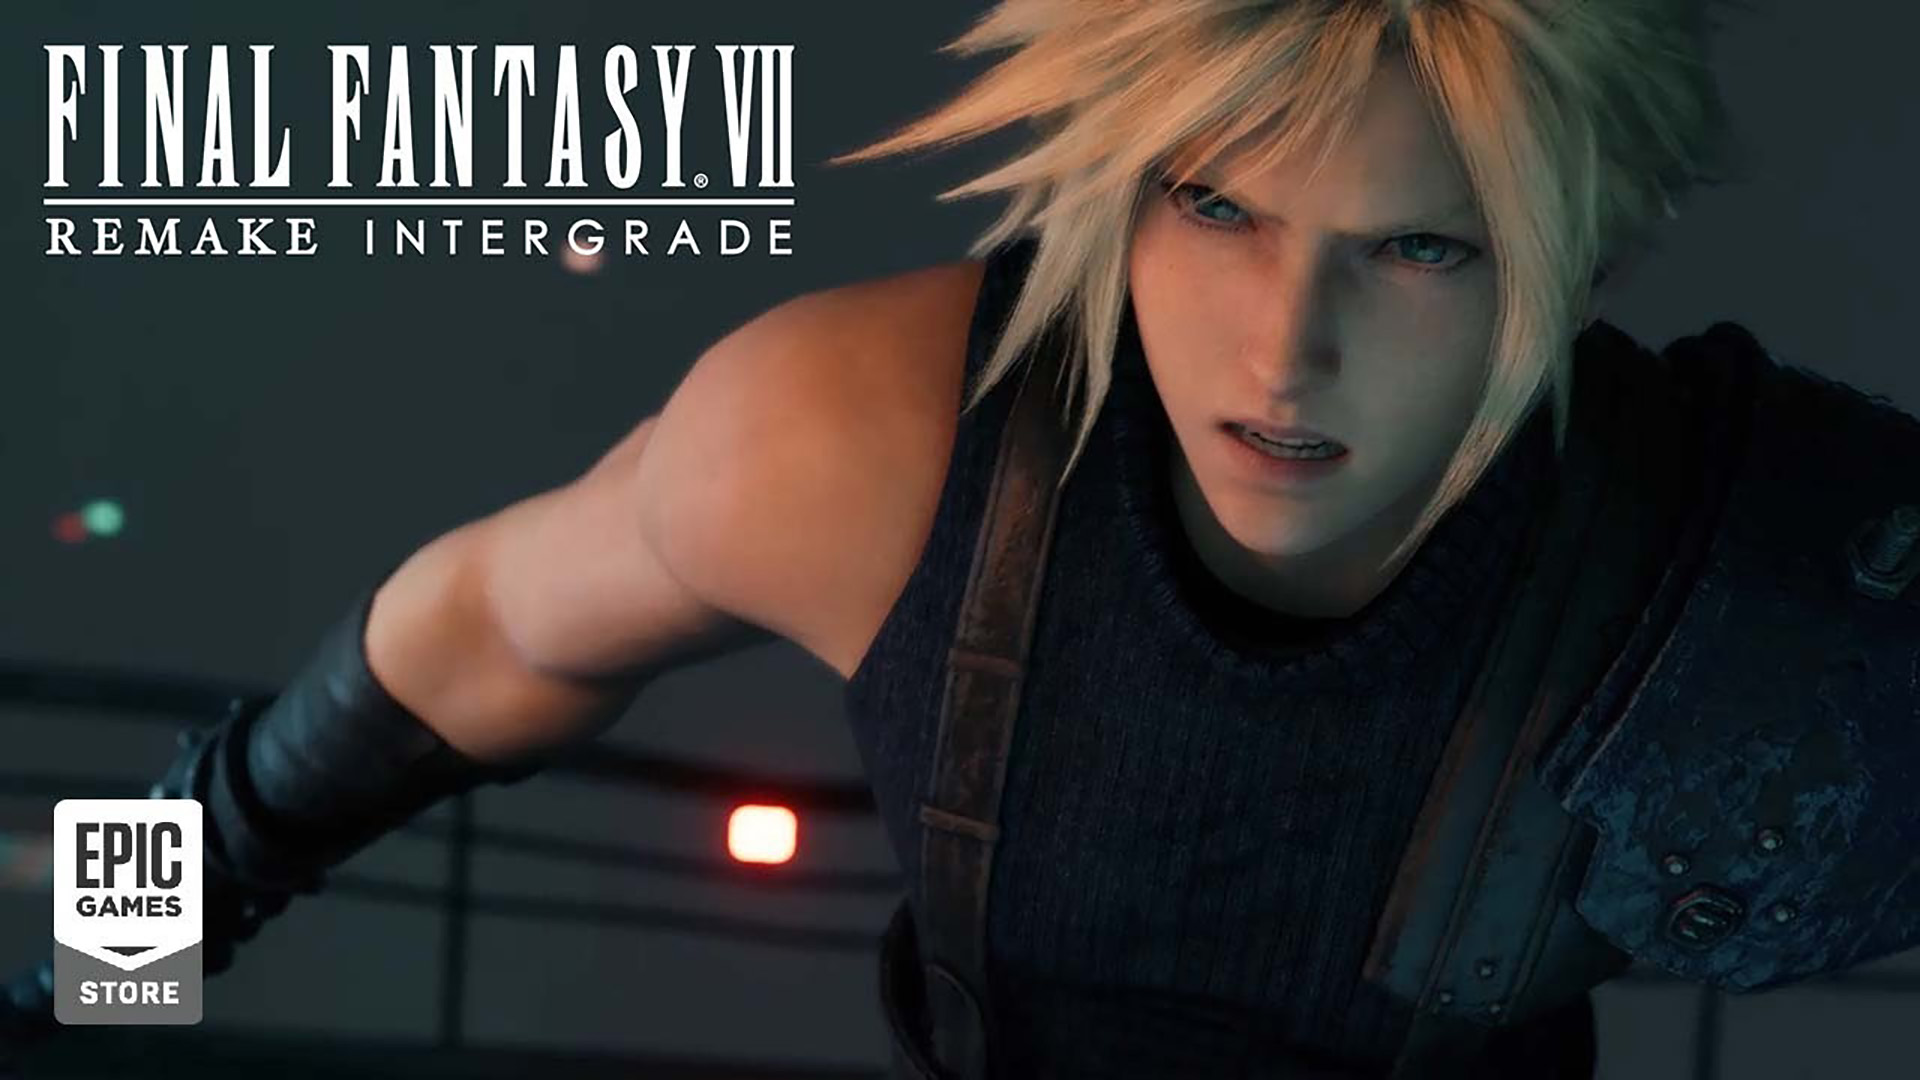 Final Fantasy VII Remake Intergrade เตรียมลง PC 16 ธ.ค. นี้